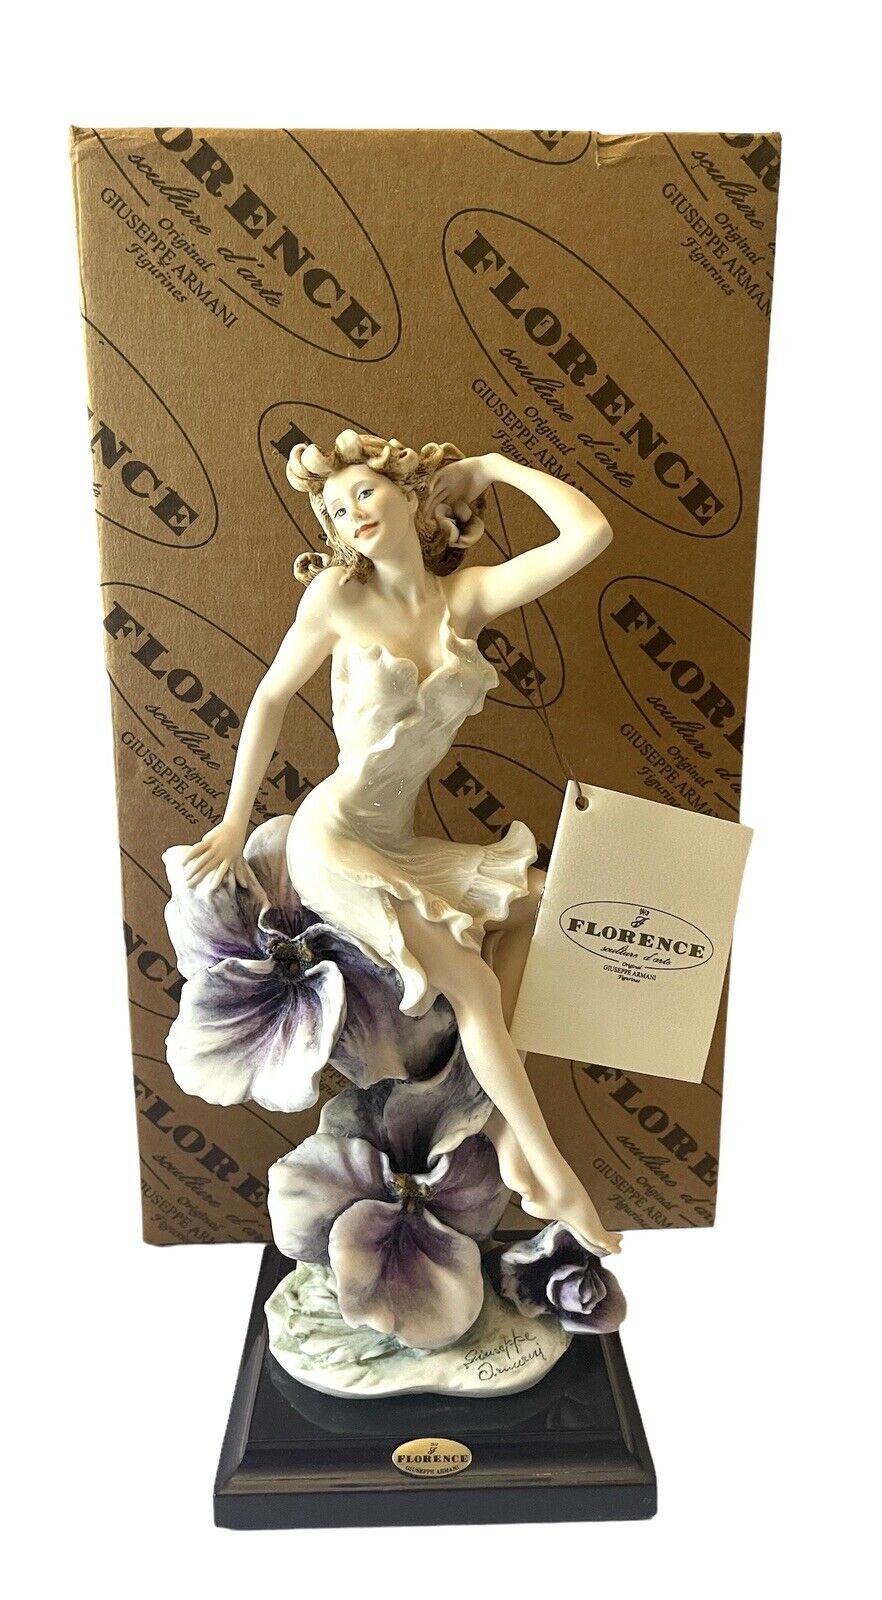 GIUSEPPE ARMANI MISS VIOLET 1351C 10” Porcelain Figurine Florence Italy W/ Box